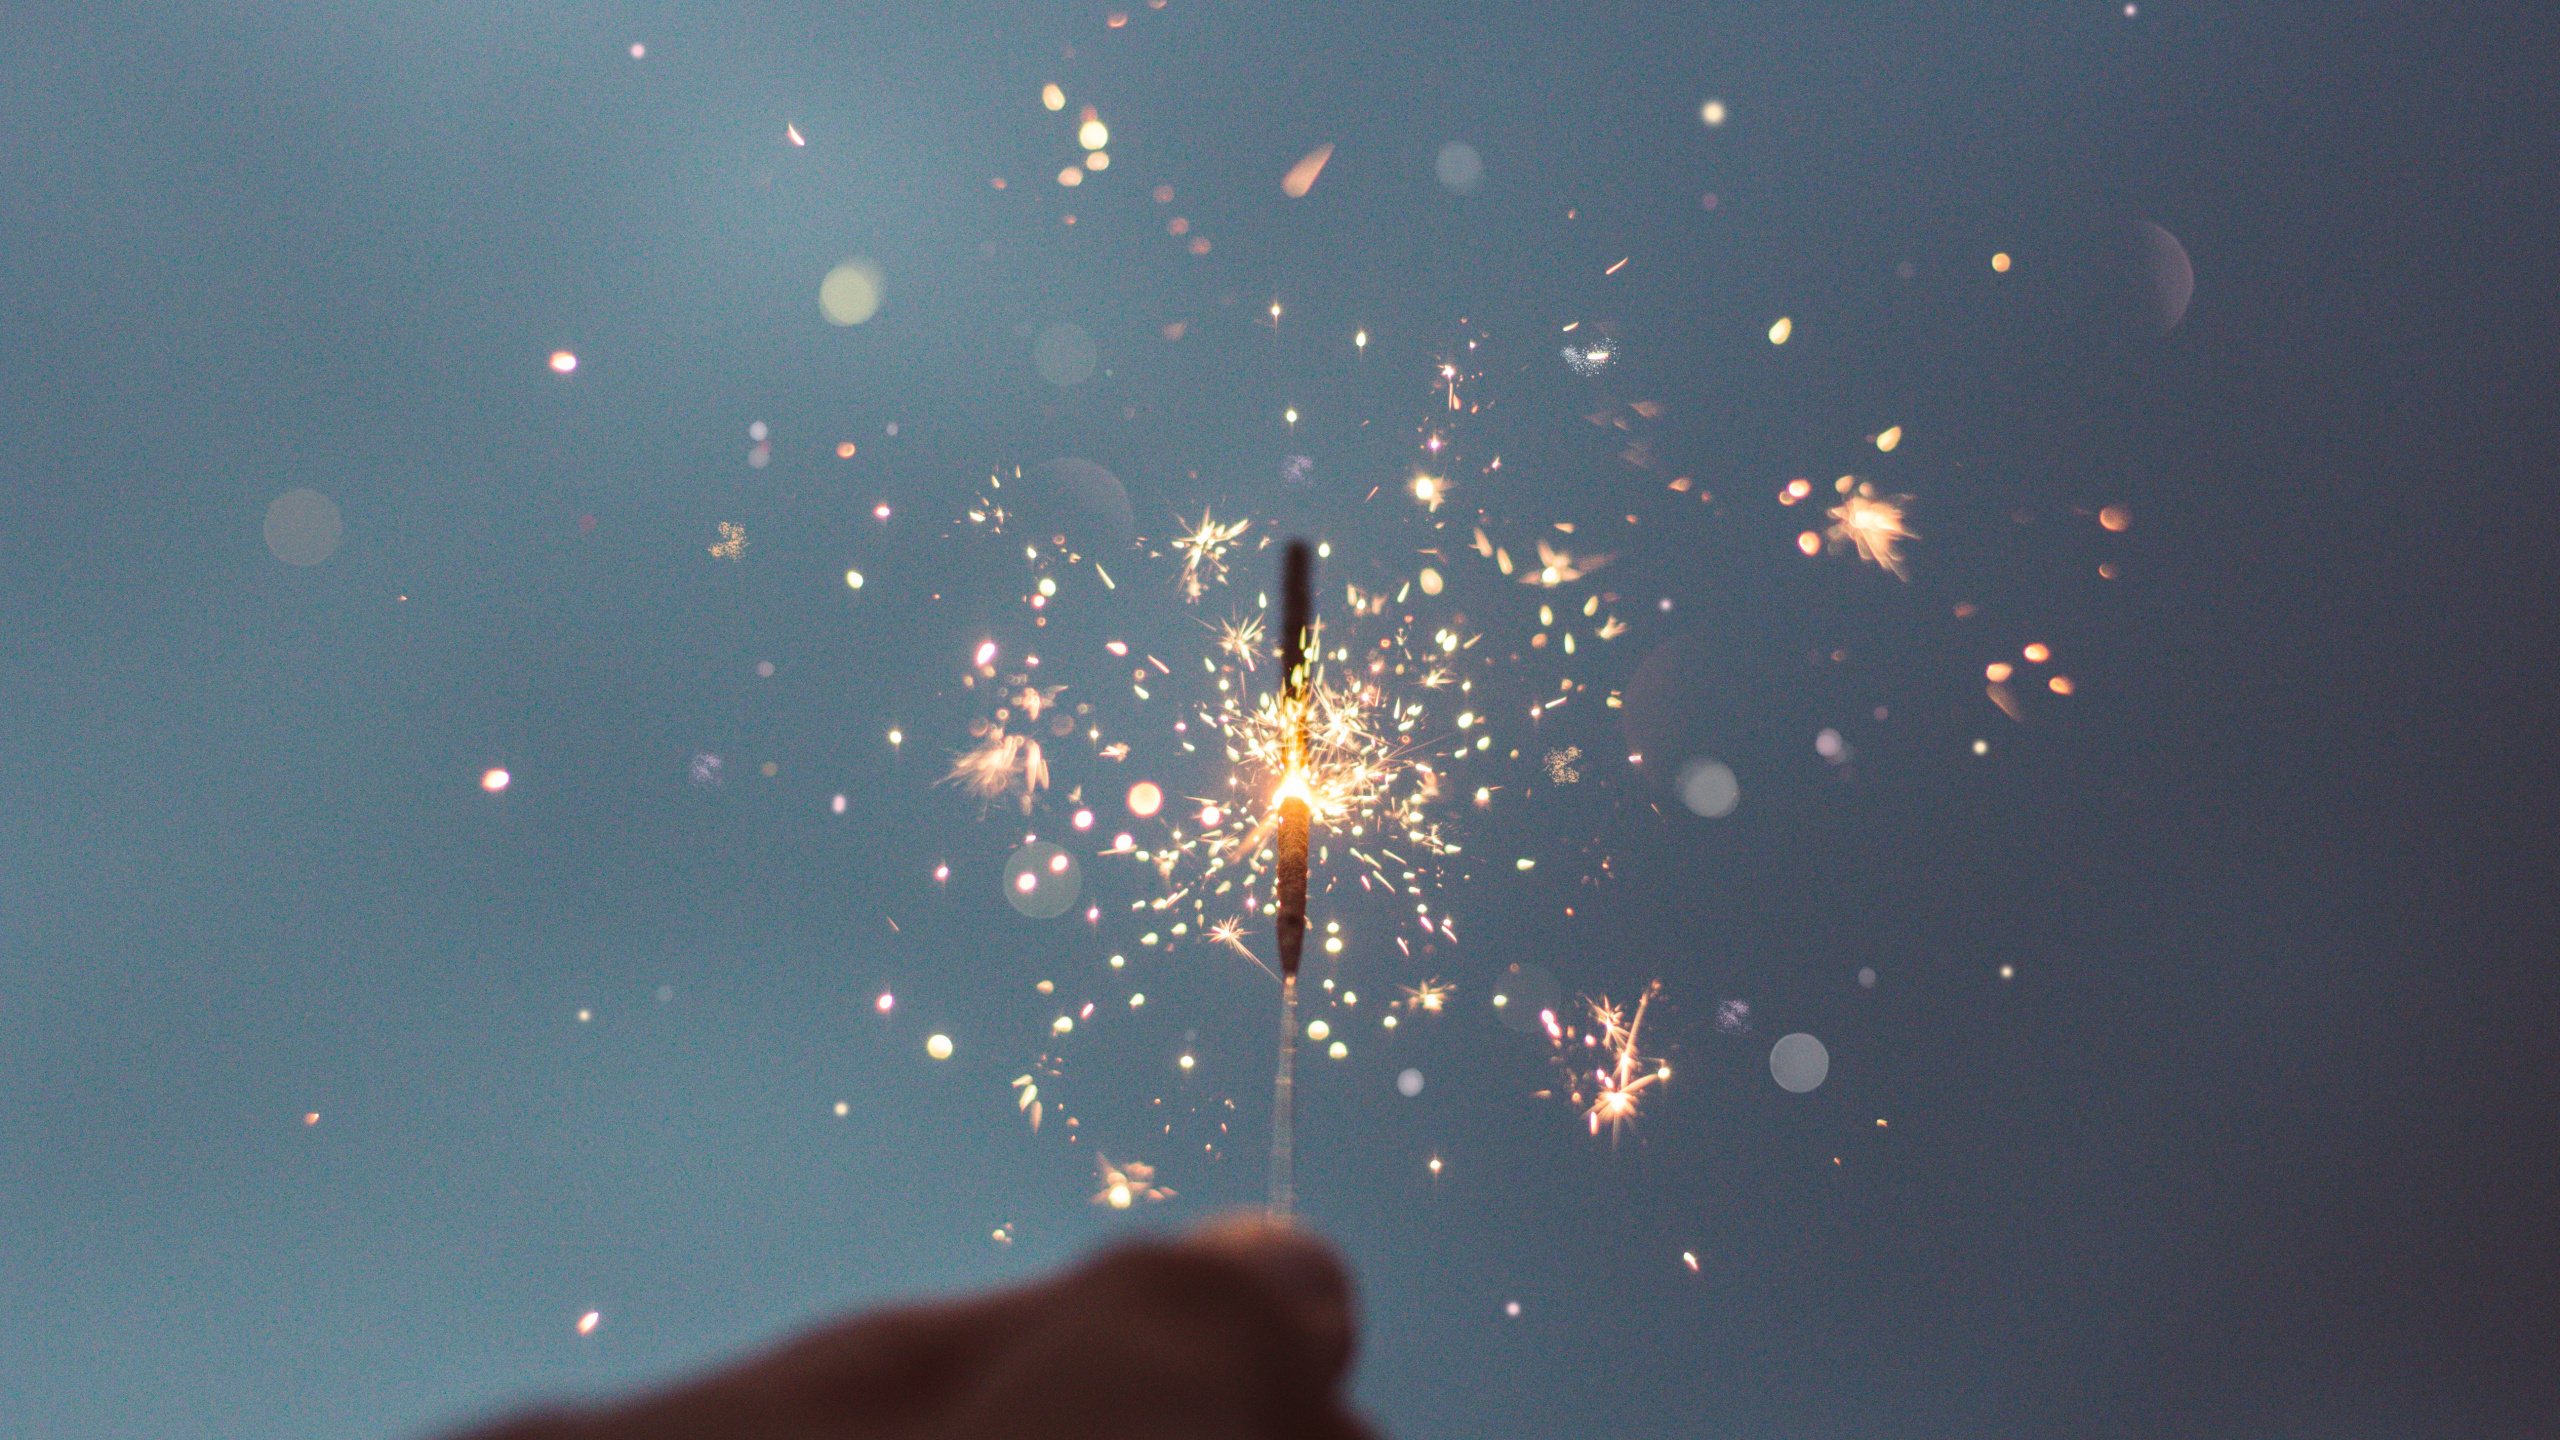 New Year, Water, Sparkler, Fireworks, Hand. Wallpaper in 2560x1440 Resolution